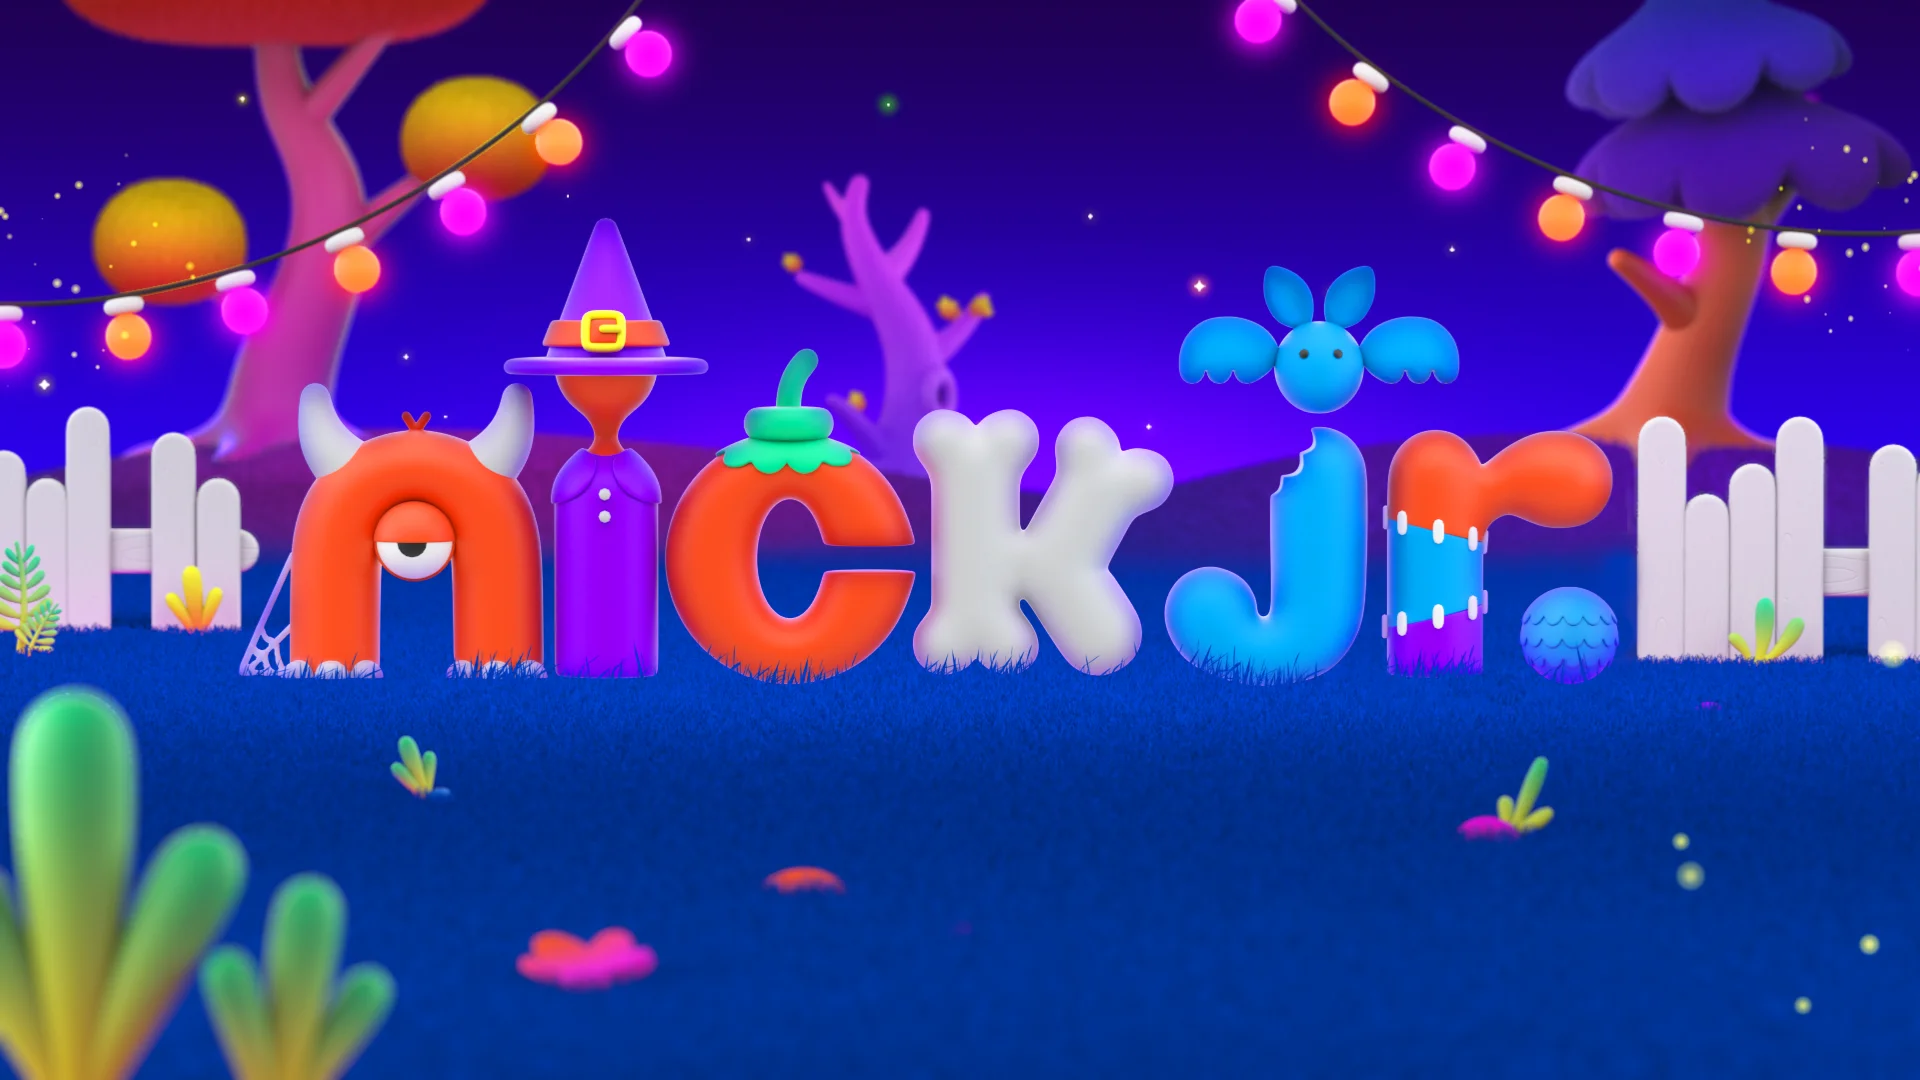 Nick Jr. Halloween 2019 Campaign on Vimeo